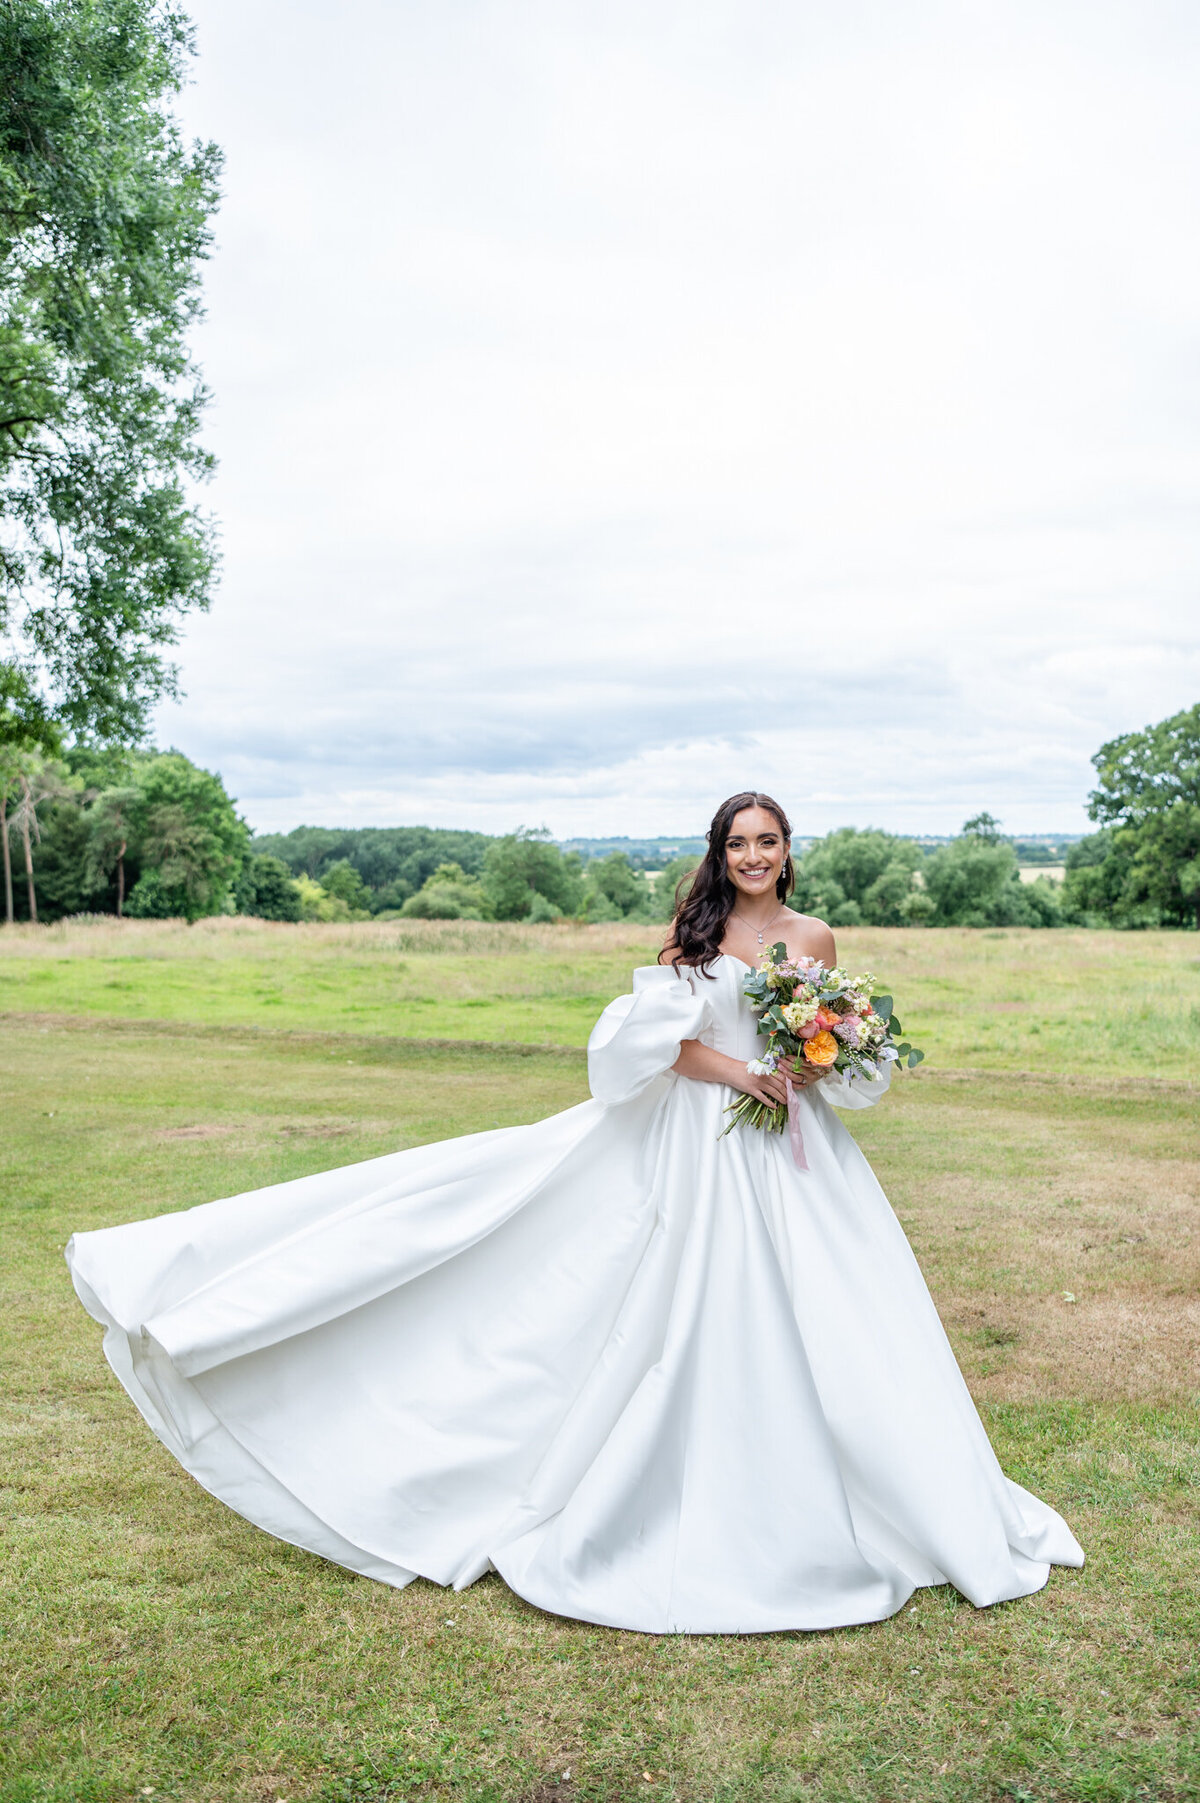 Chloe Bolam - UK Wedding and Engagment Photographer - Swanbourne House Wedding Venue Milton Keynes - Destination Wedding in the UK - 11